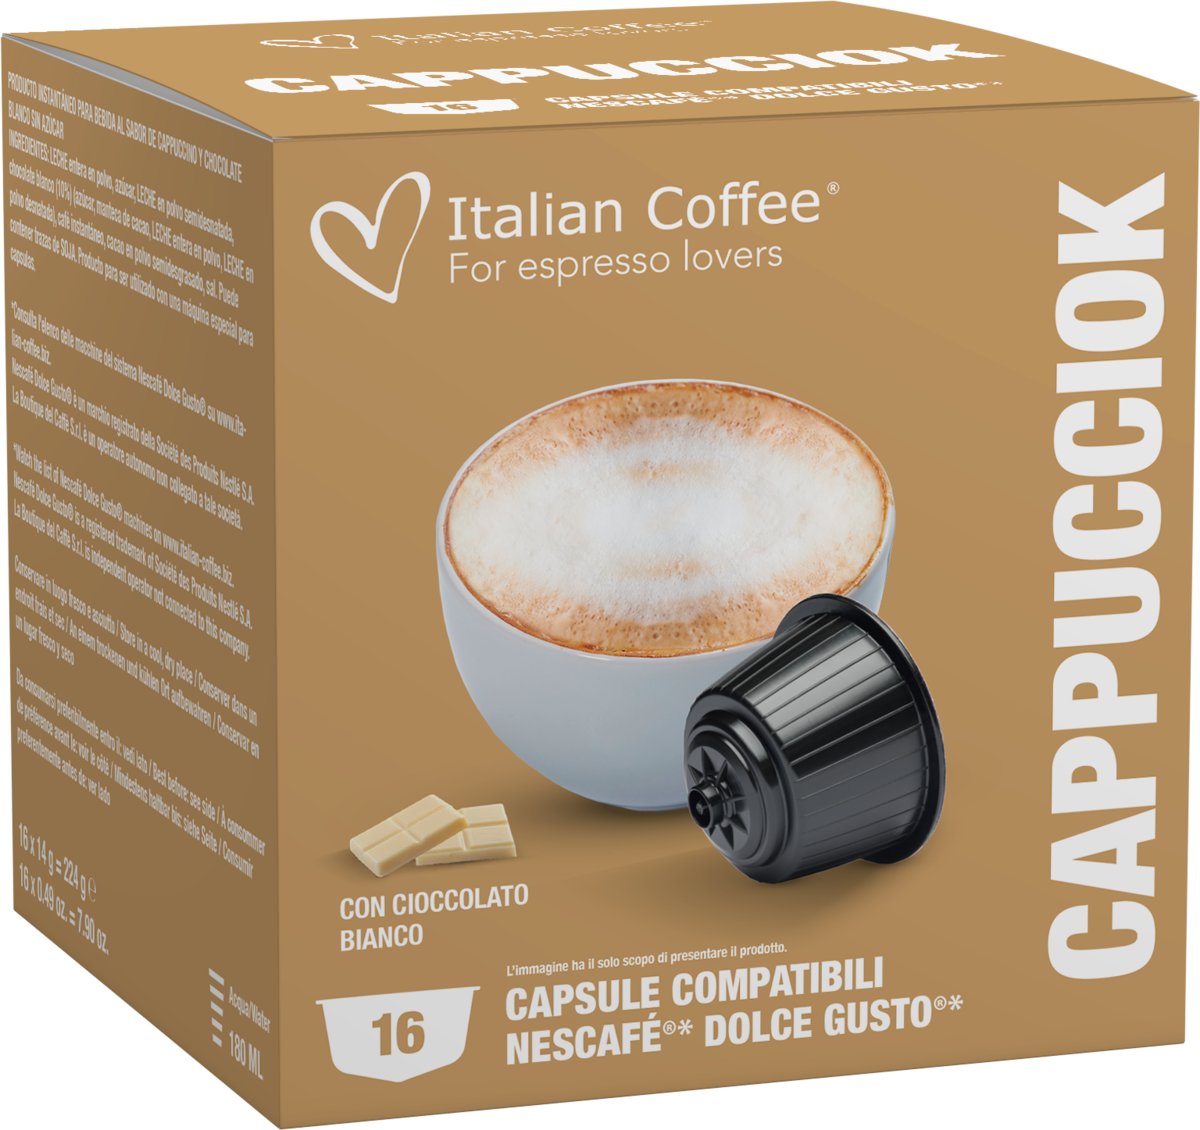 Italian Coffee Cappucciok (Cappuccino al CIOCCOLATO BIANCO) kapsułki do Dolce Gusto - 16 kapsułek